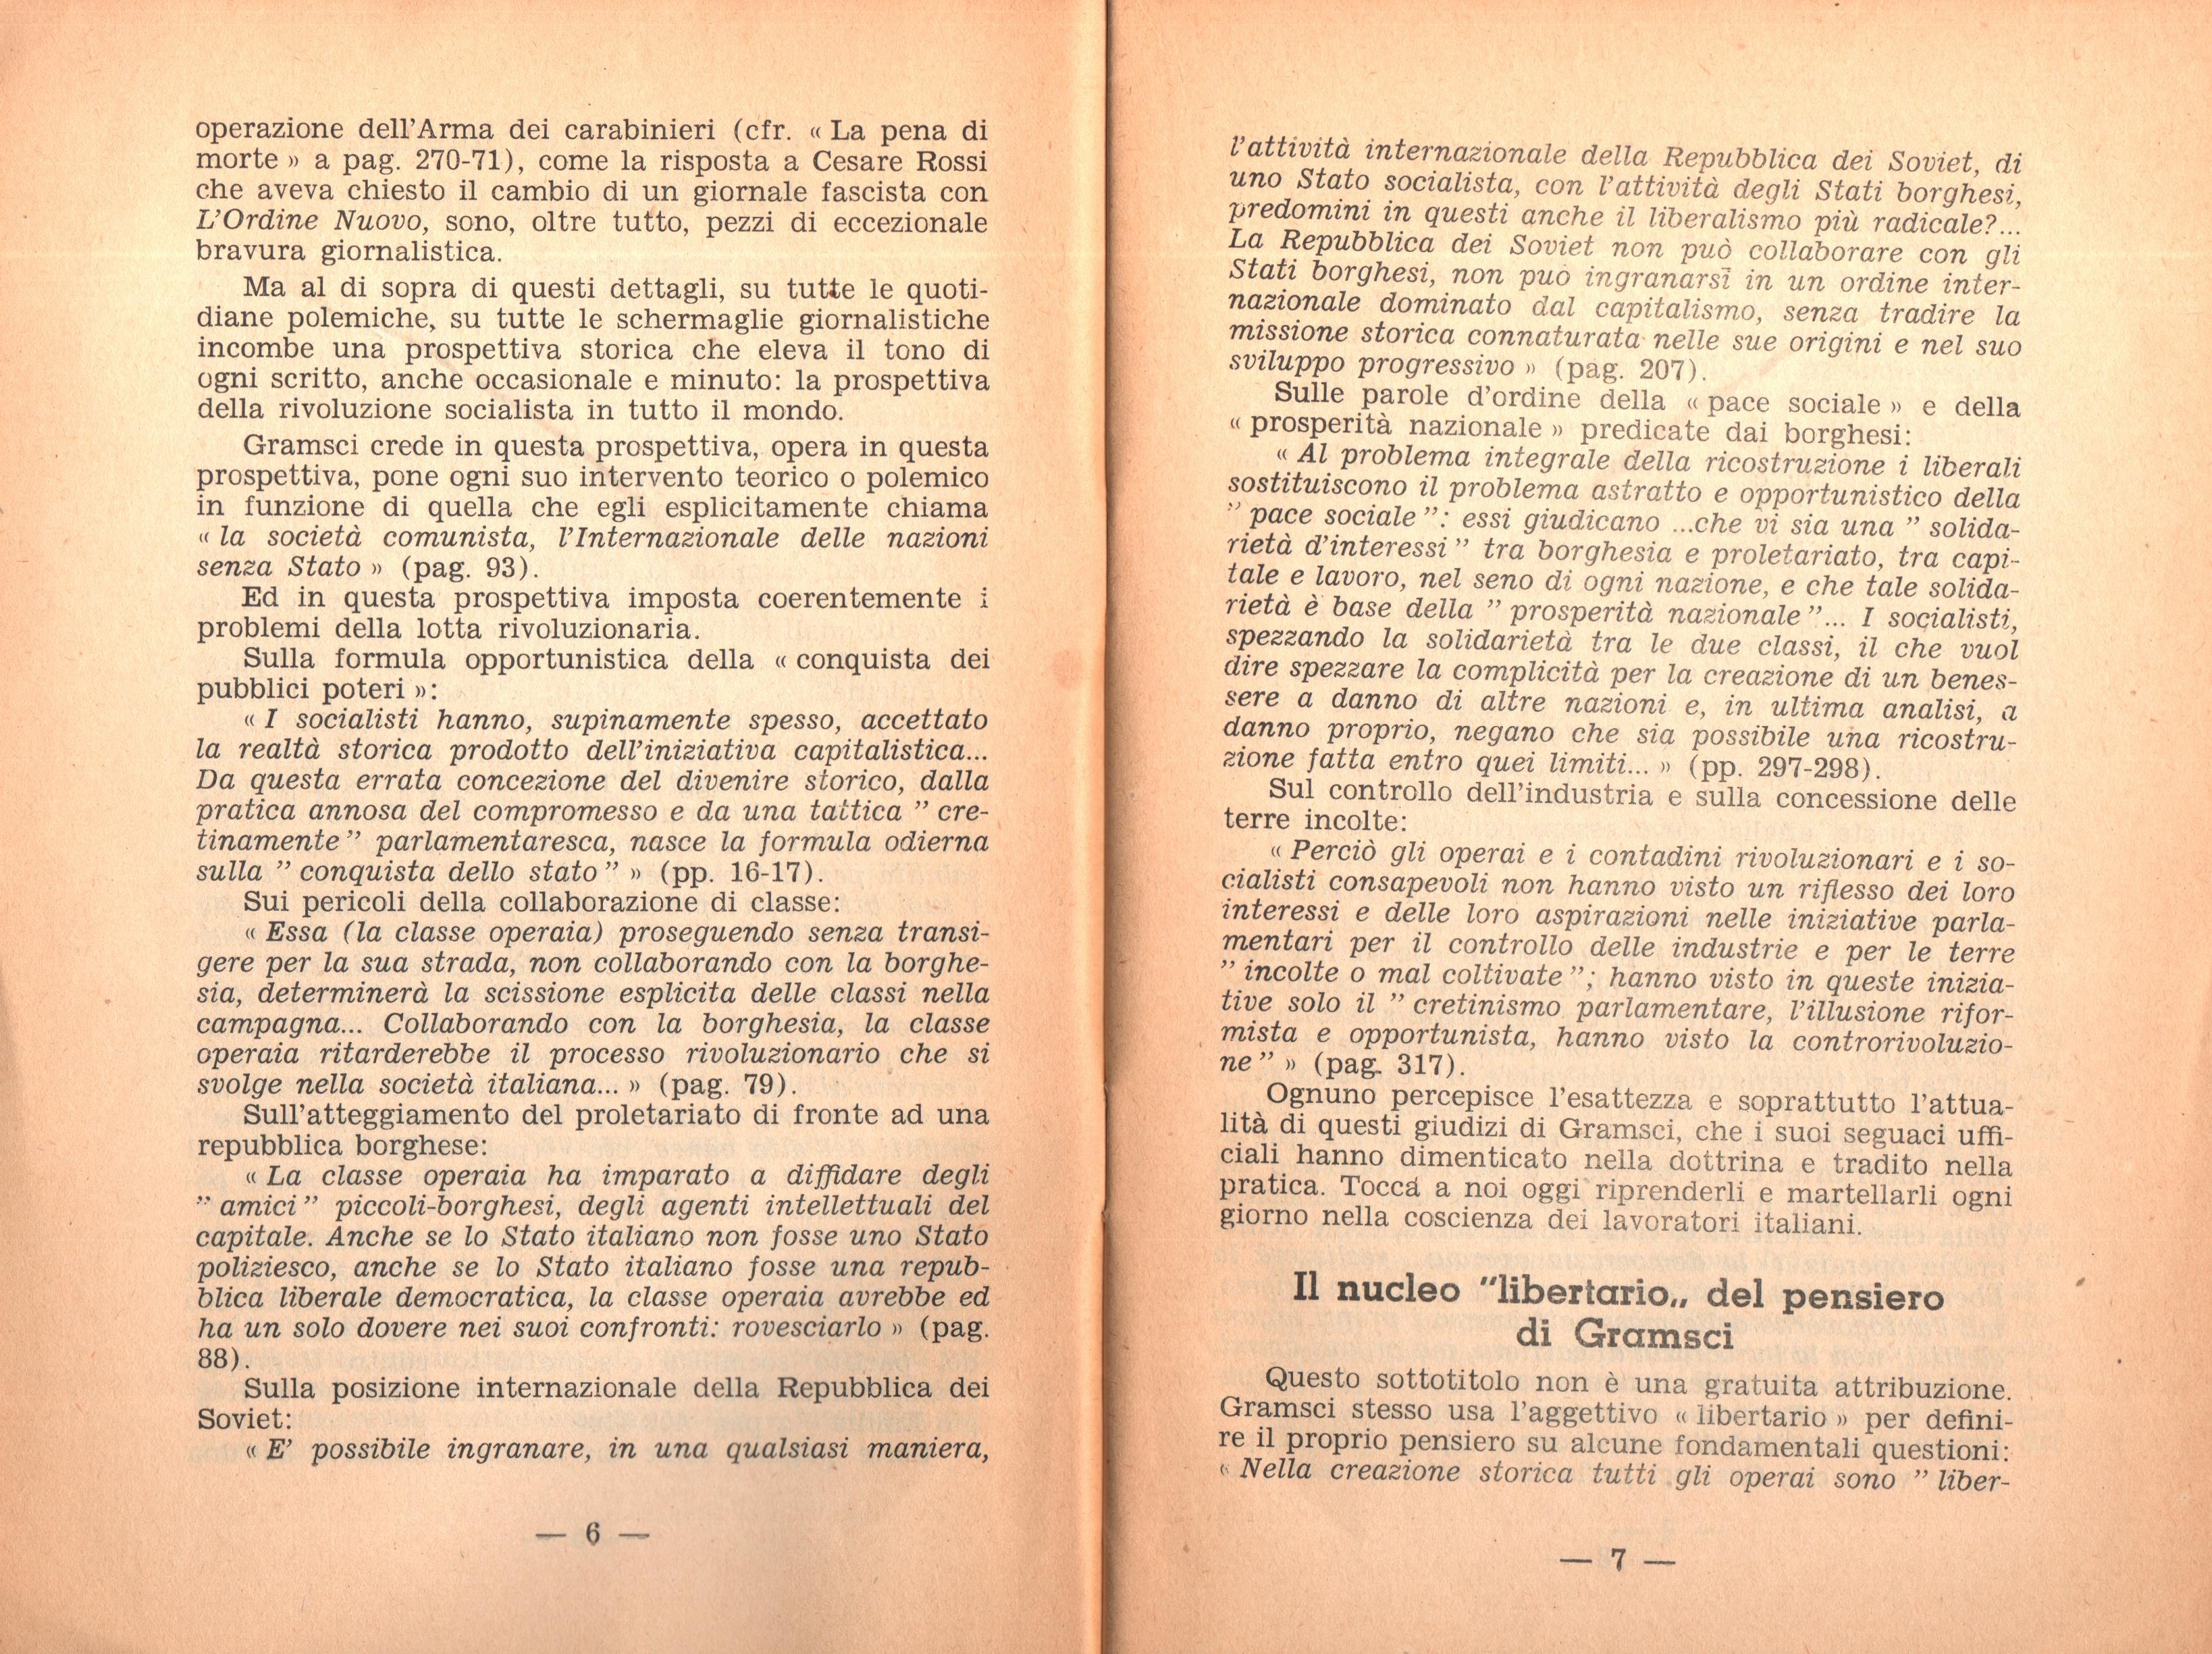 Pier Carlo Masini, Antonio Gramsci - pag. 5